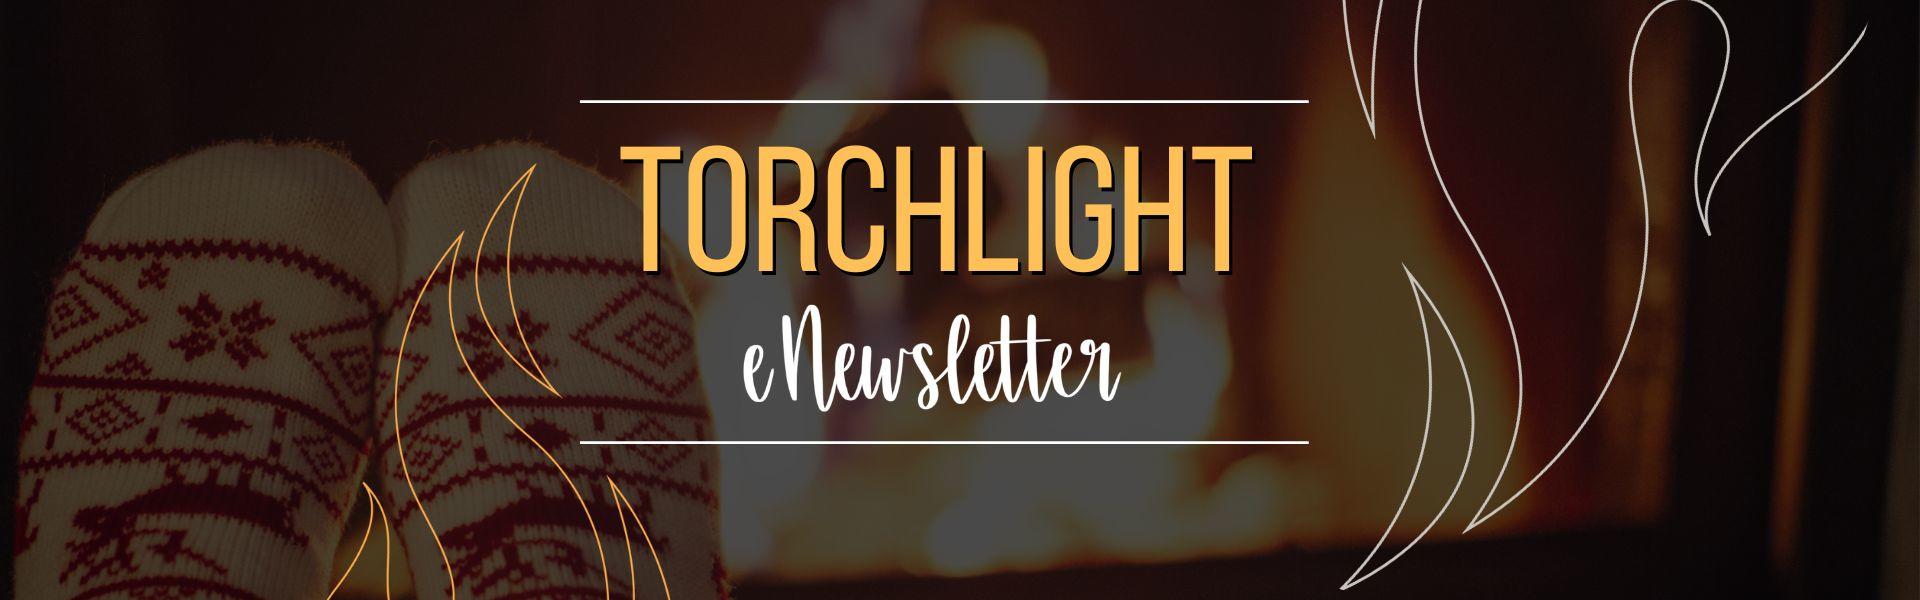 Torchlight eNewsletter Winter Socks and Fire